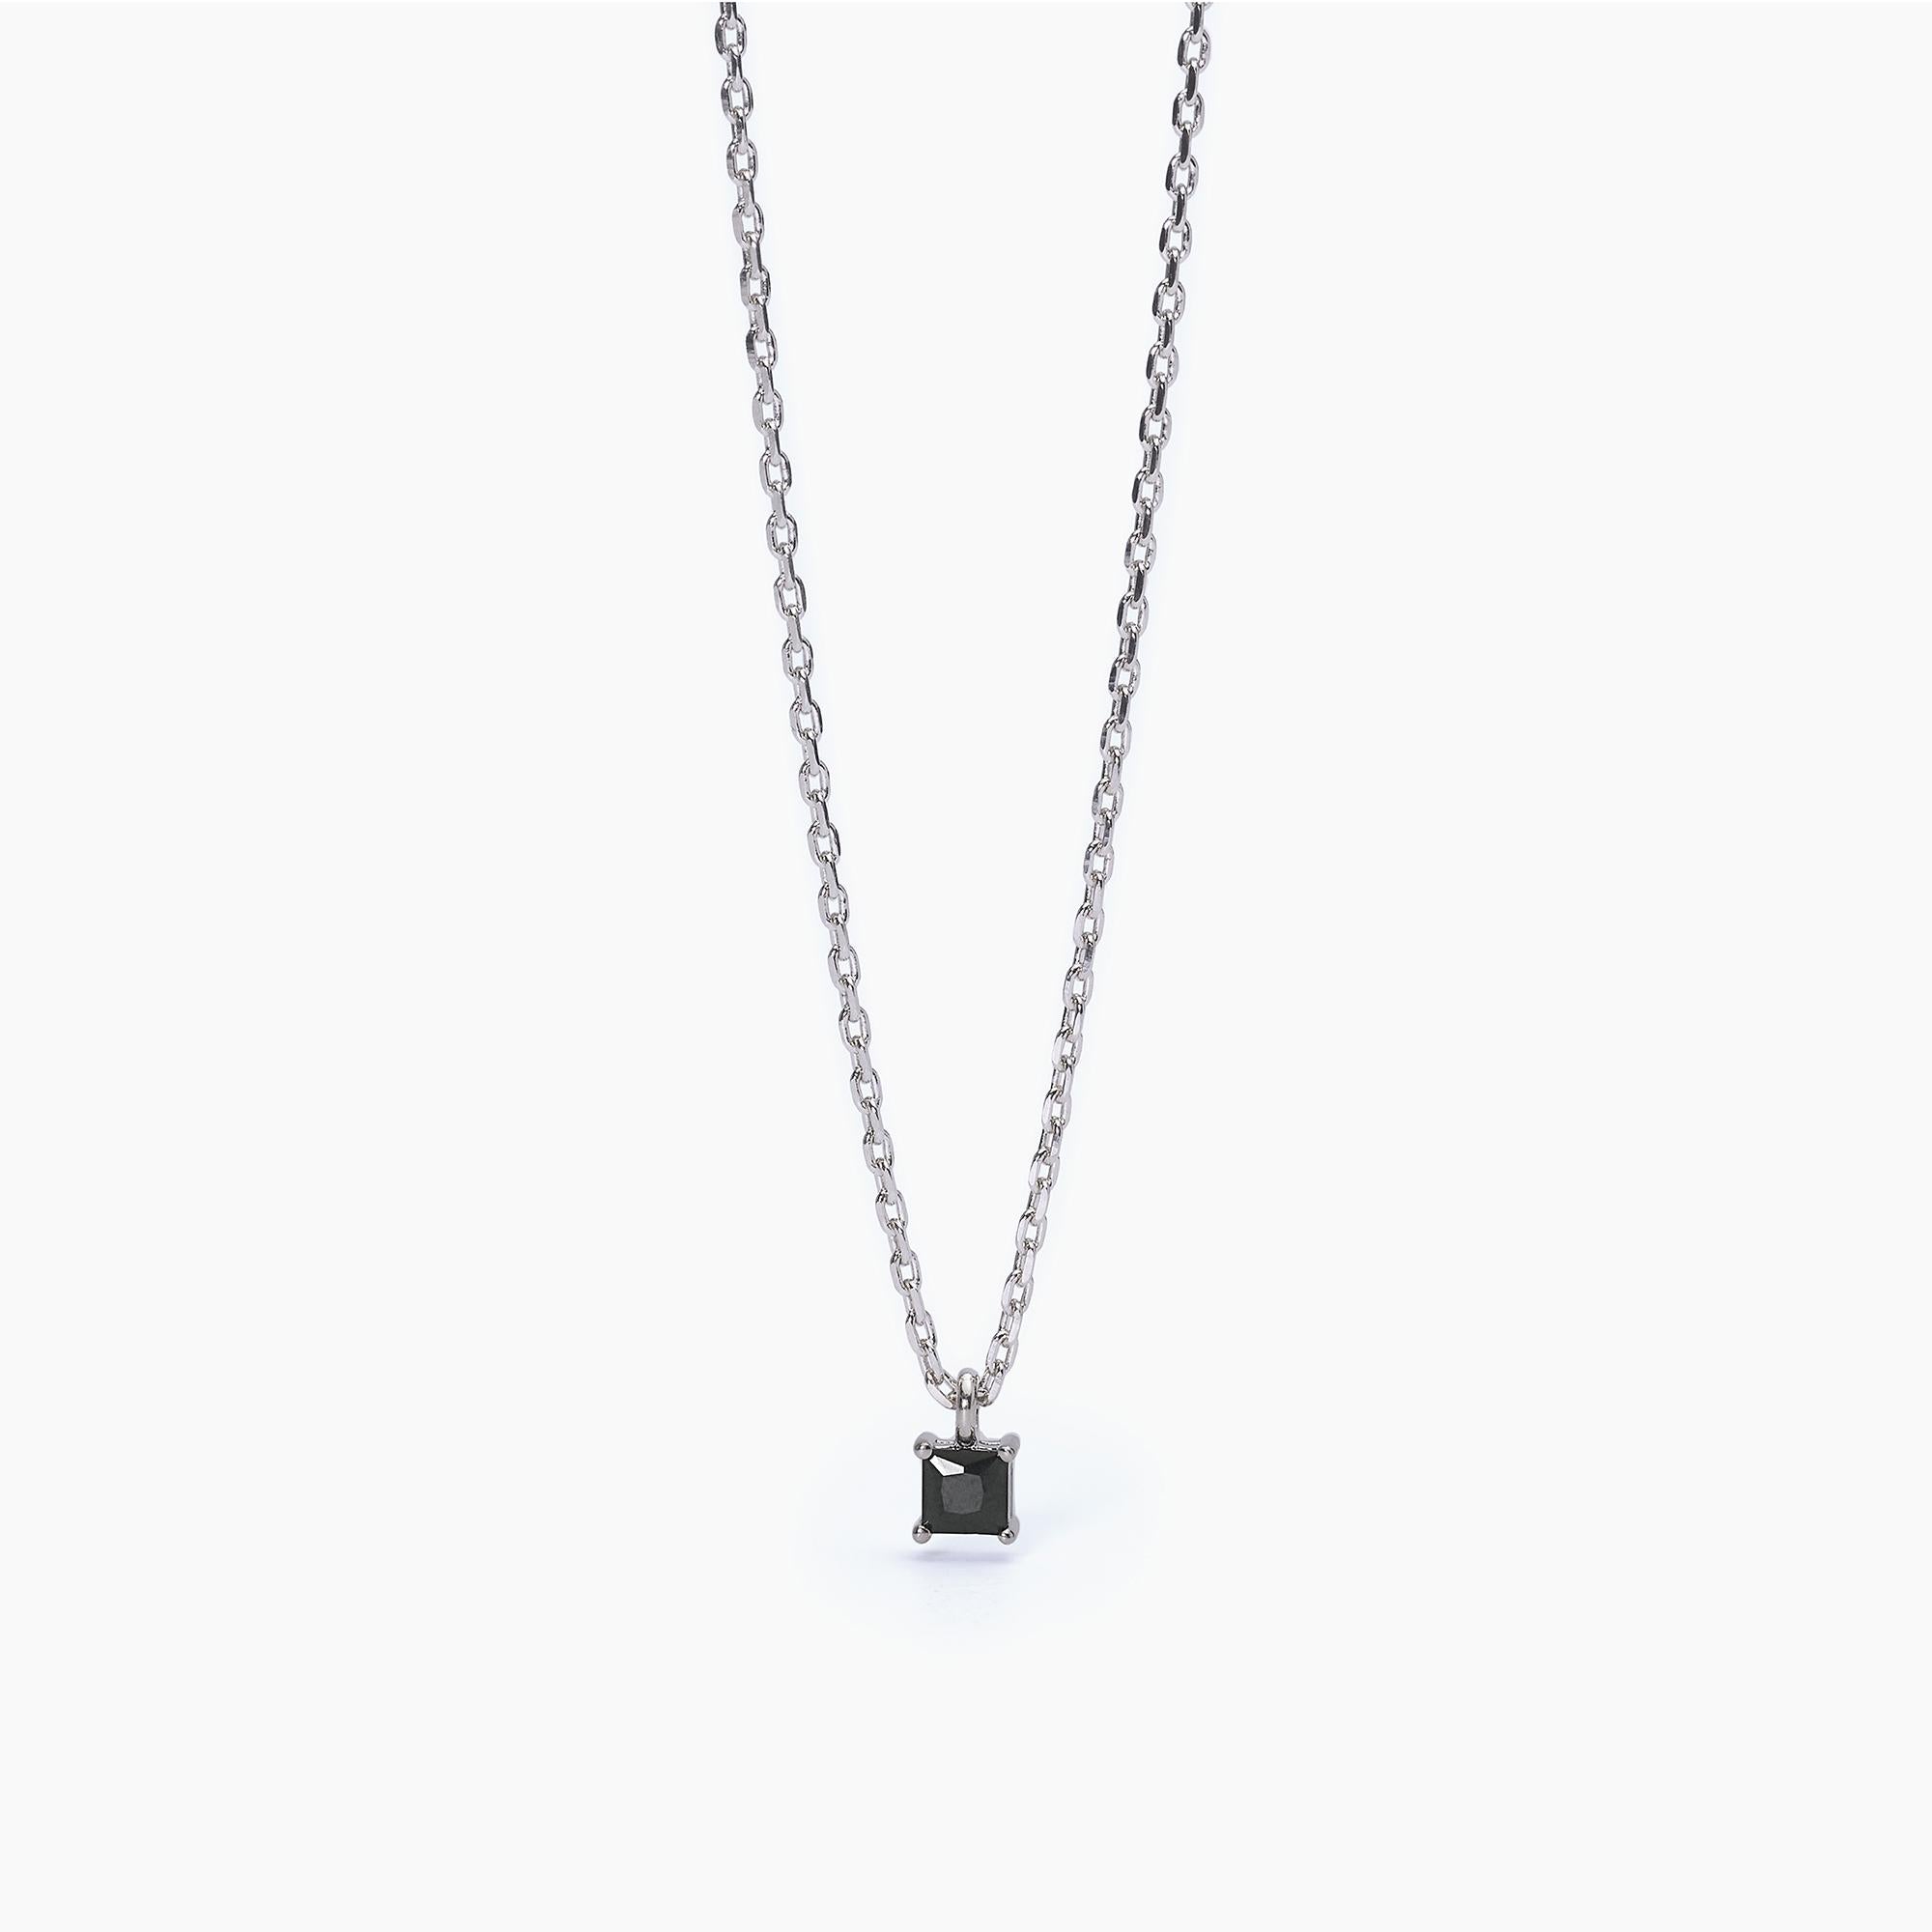 Mabina Uomo - Men's silver necklace with PUNTO DI VISTA pendant - 553572